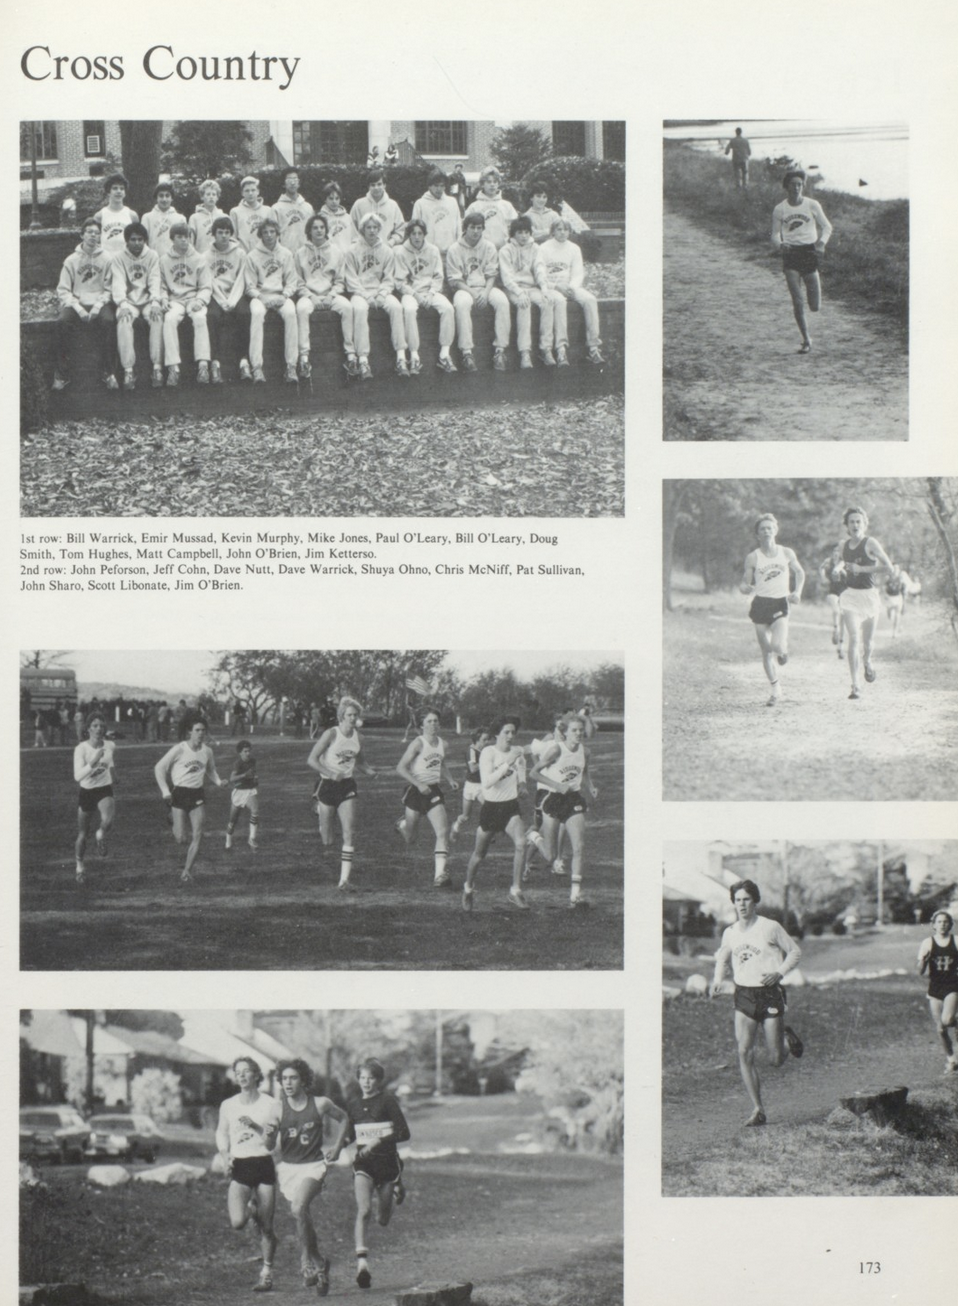 1980 Boys’ Cross Country Team